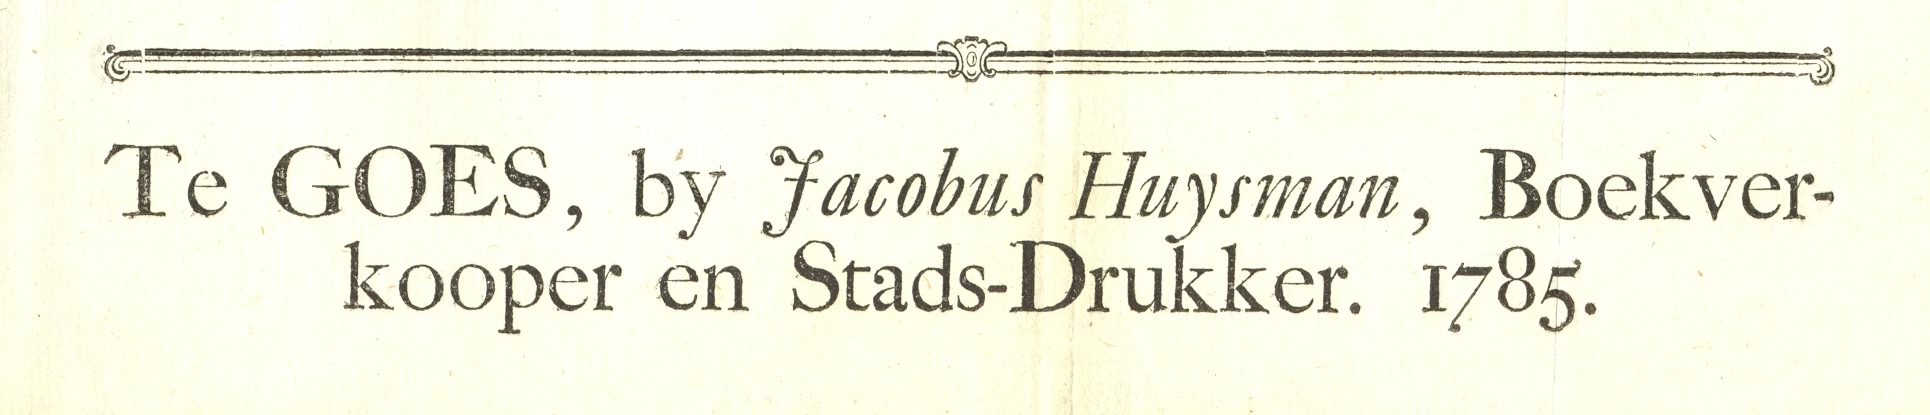 Signatuur stadsdrukker Huysman, 1785.